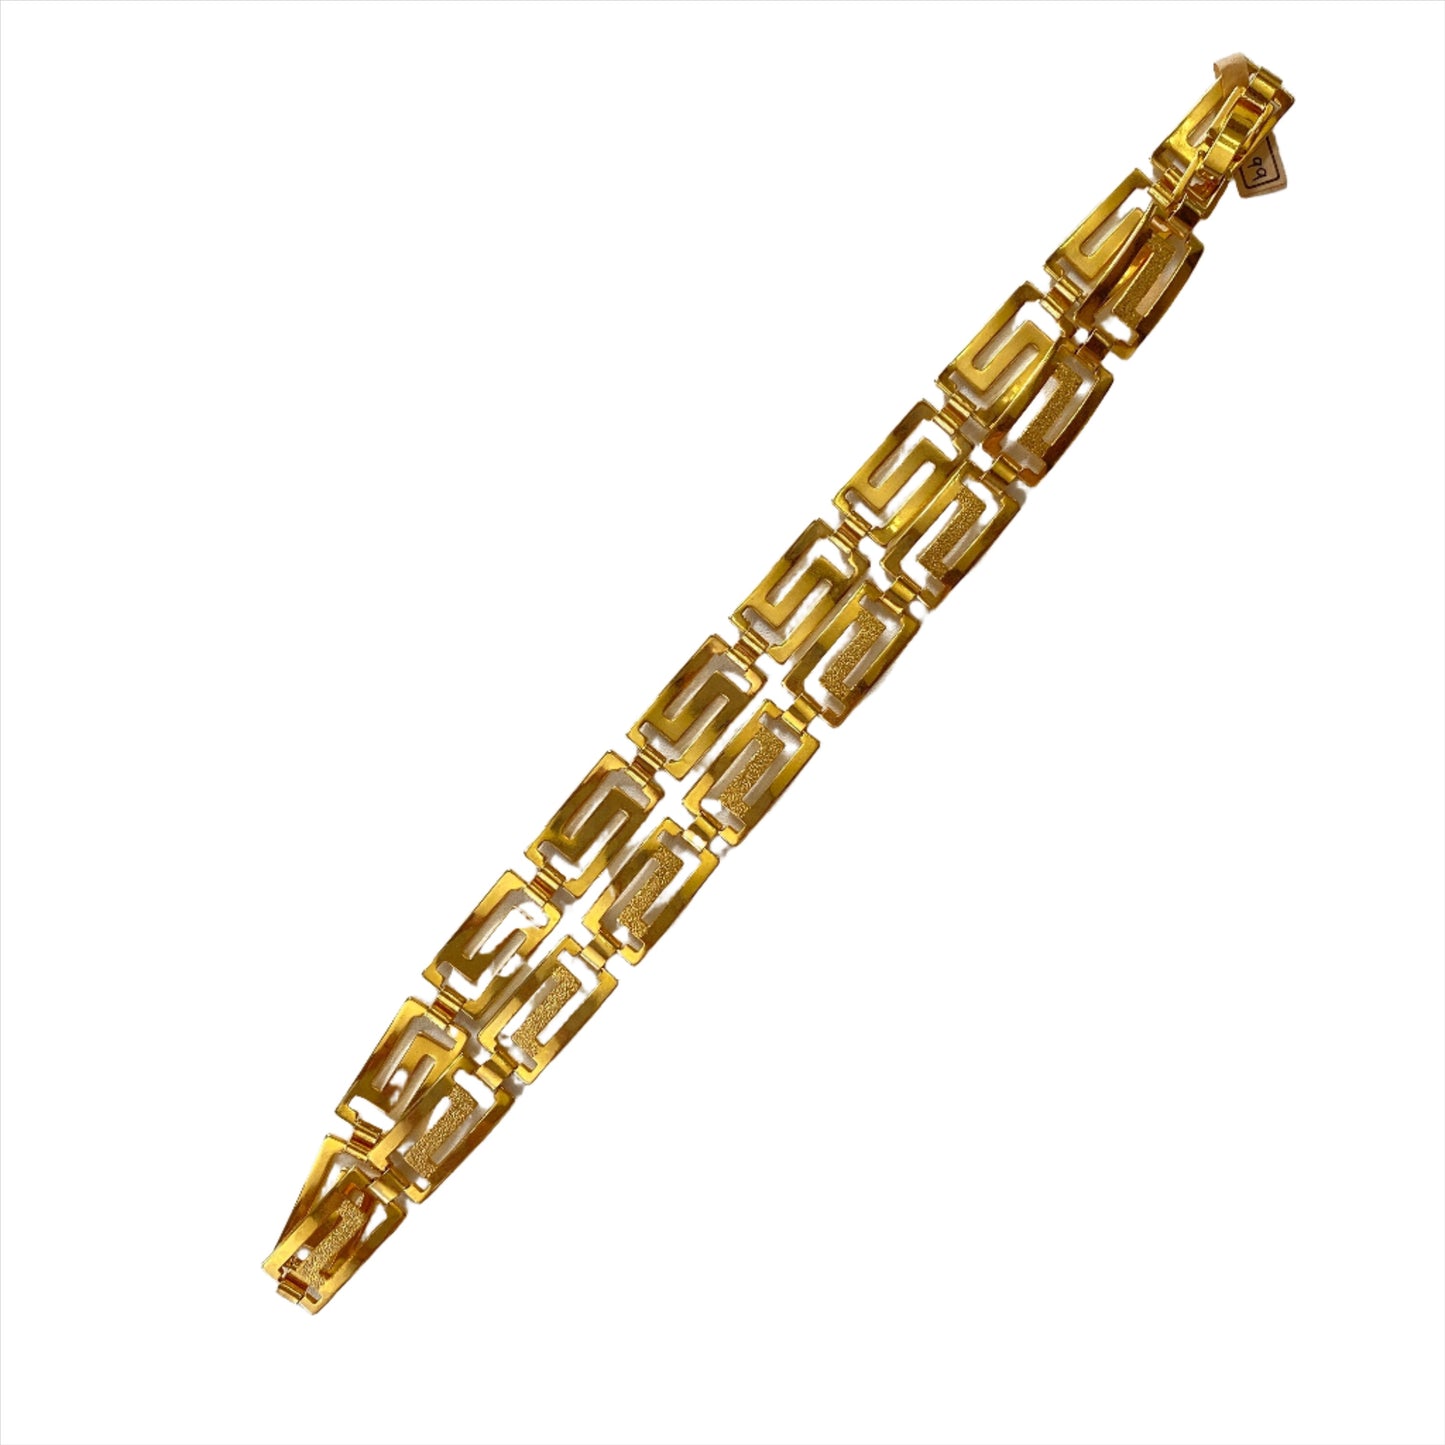 Aztec Gold Necklace Chain